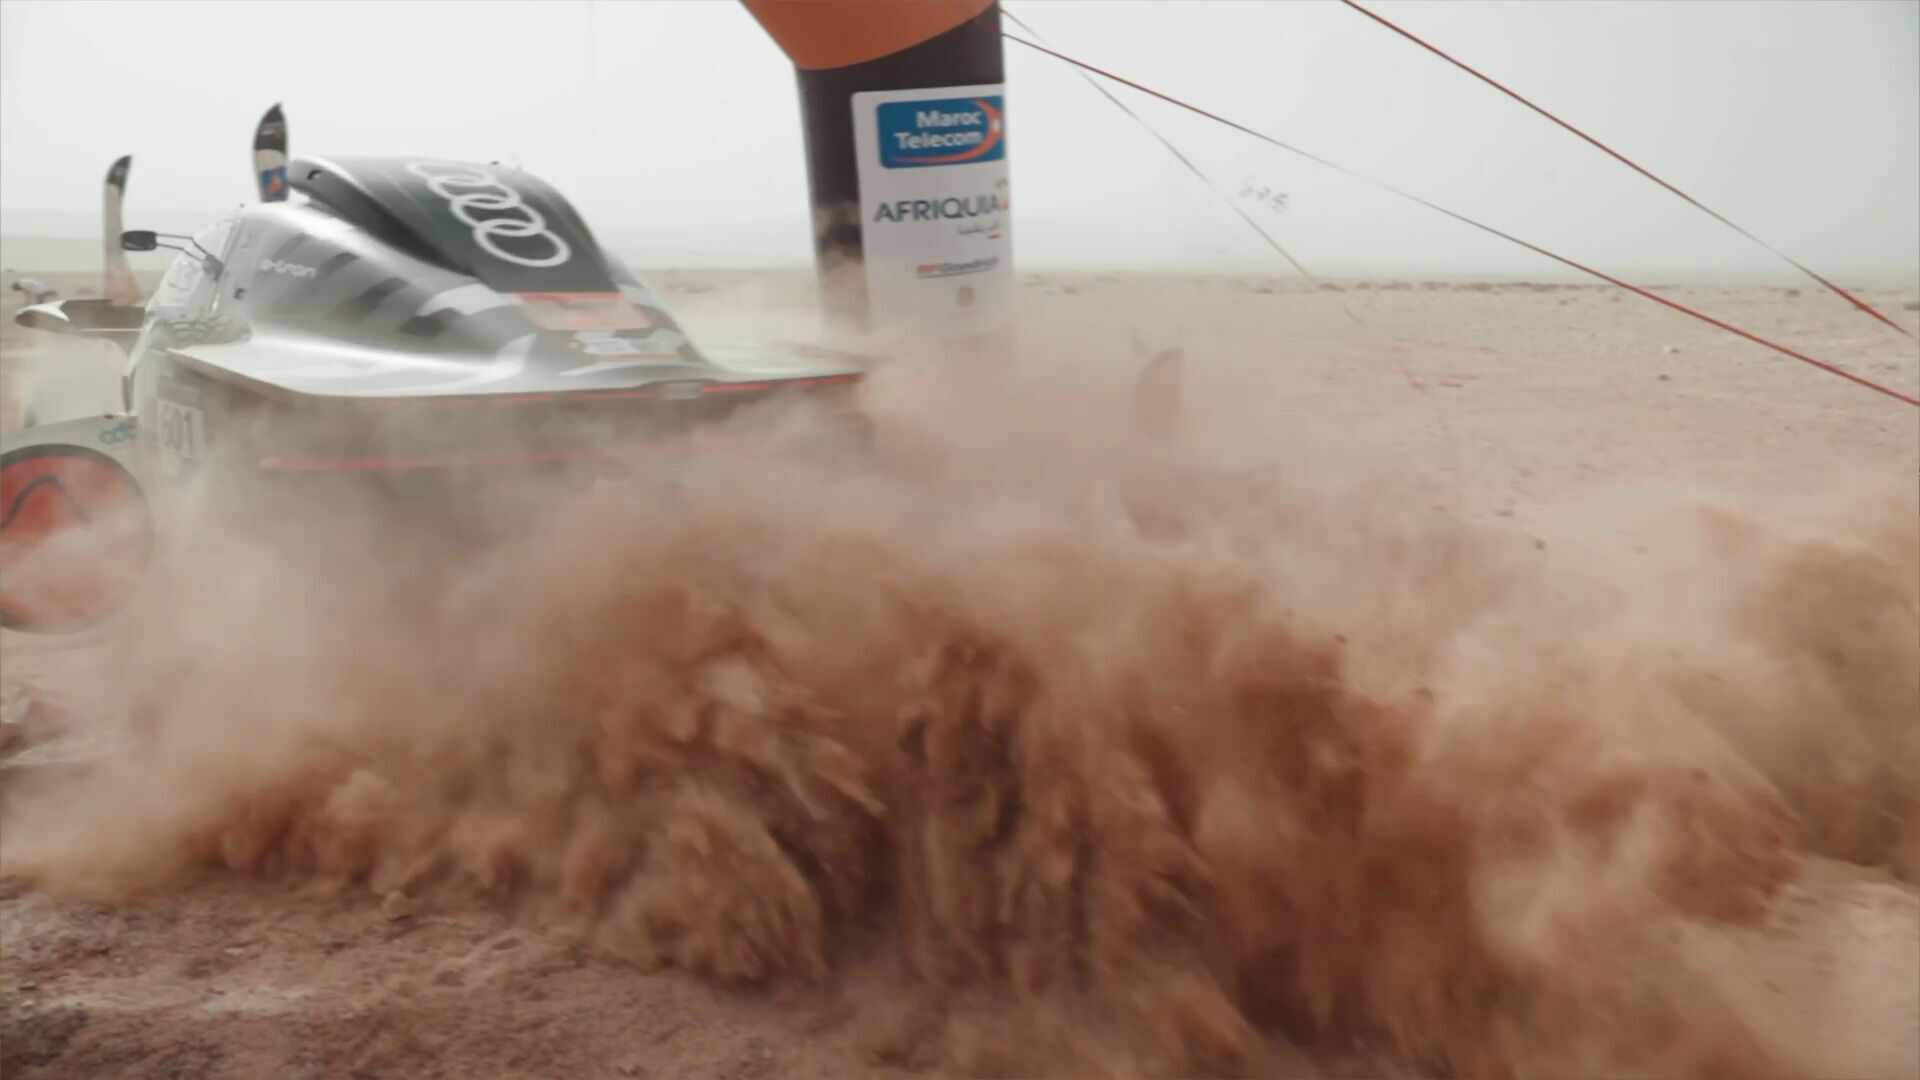 Rallye du Maroc 2022: Backstage – Dusty conditions